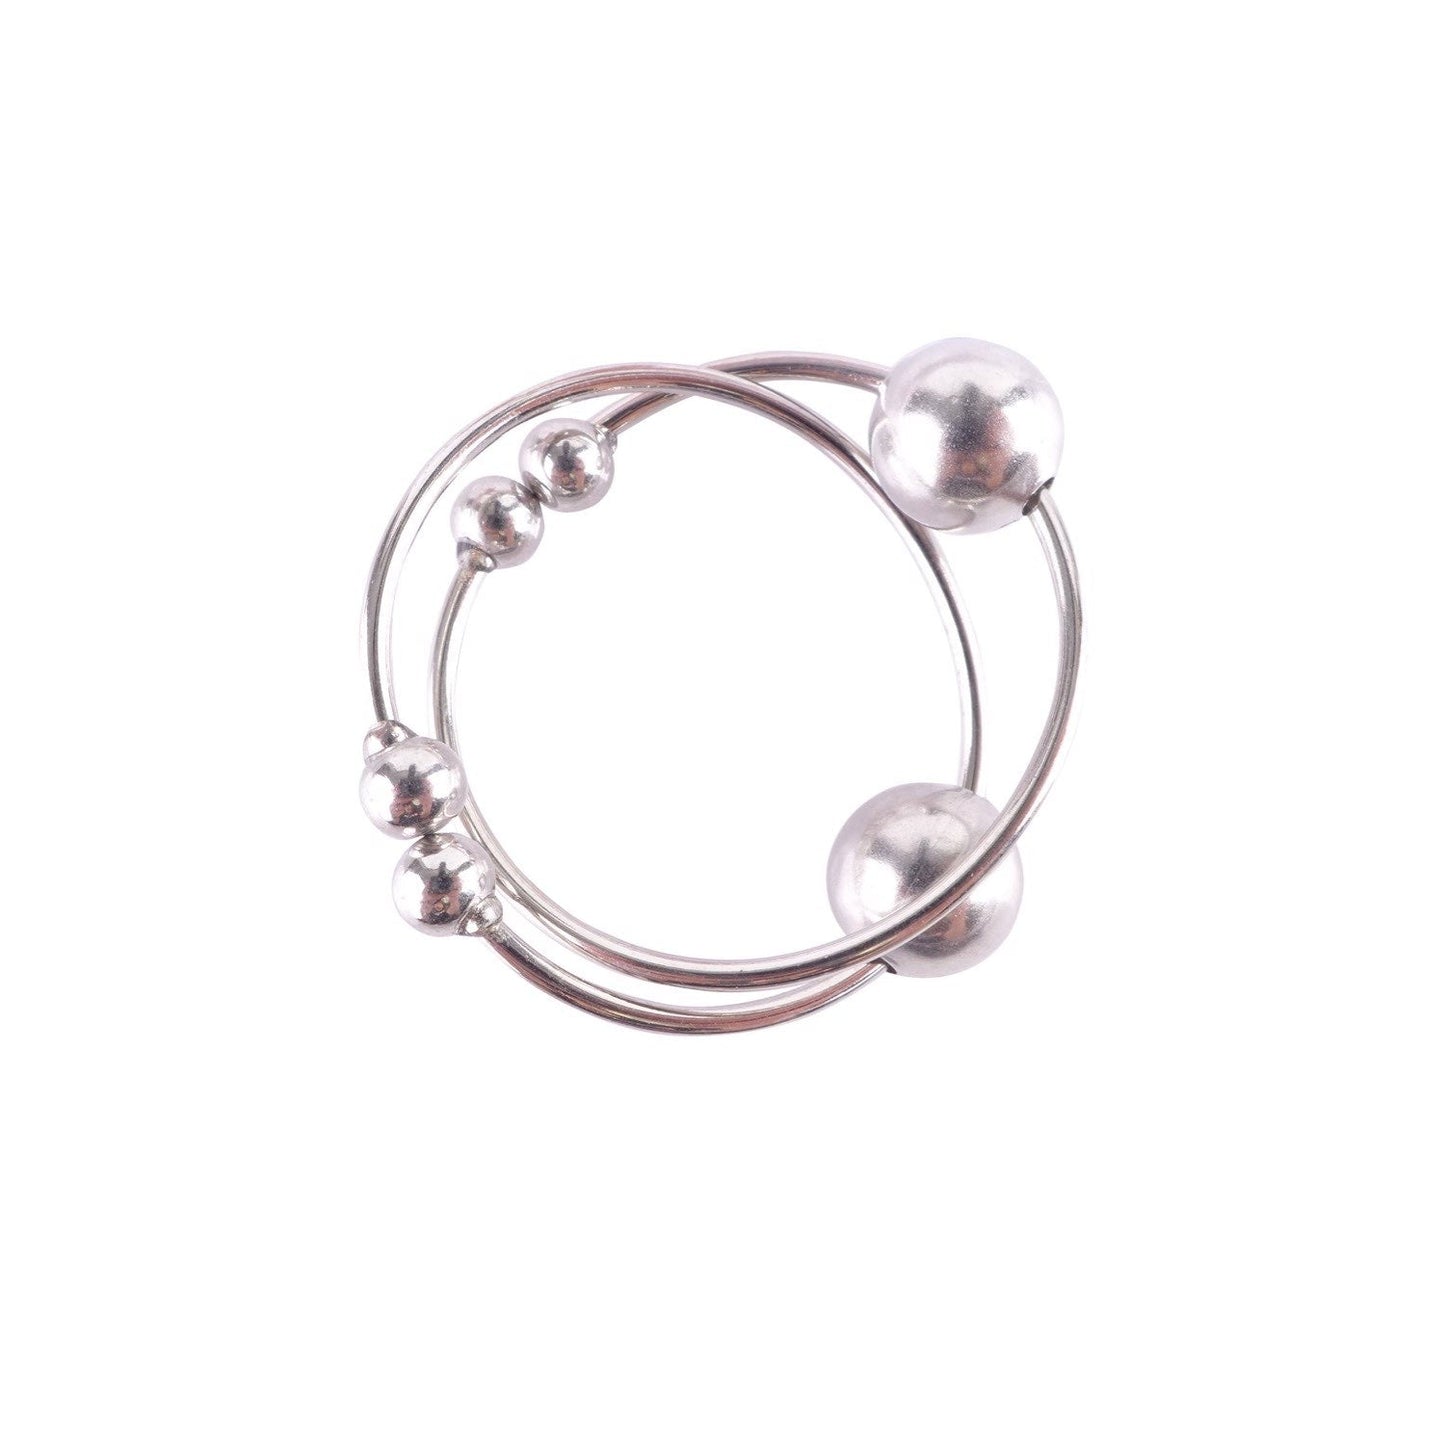 Bull Rings - Silver Nipple Rings